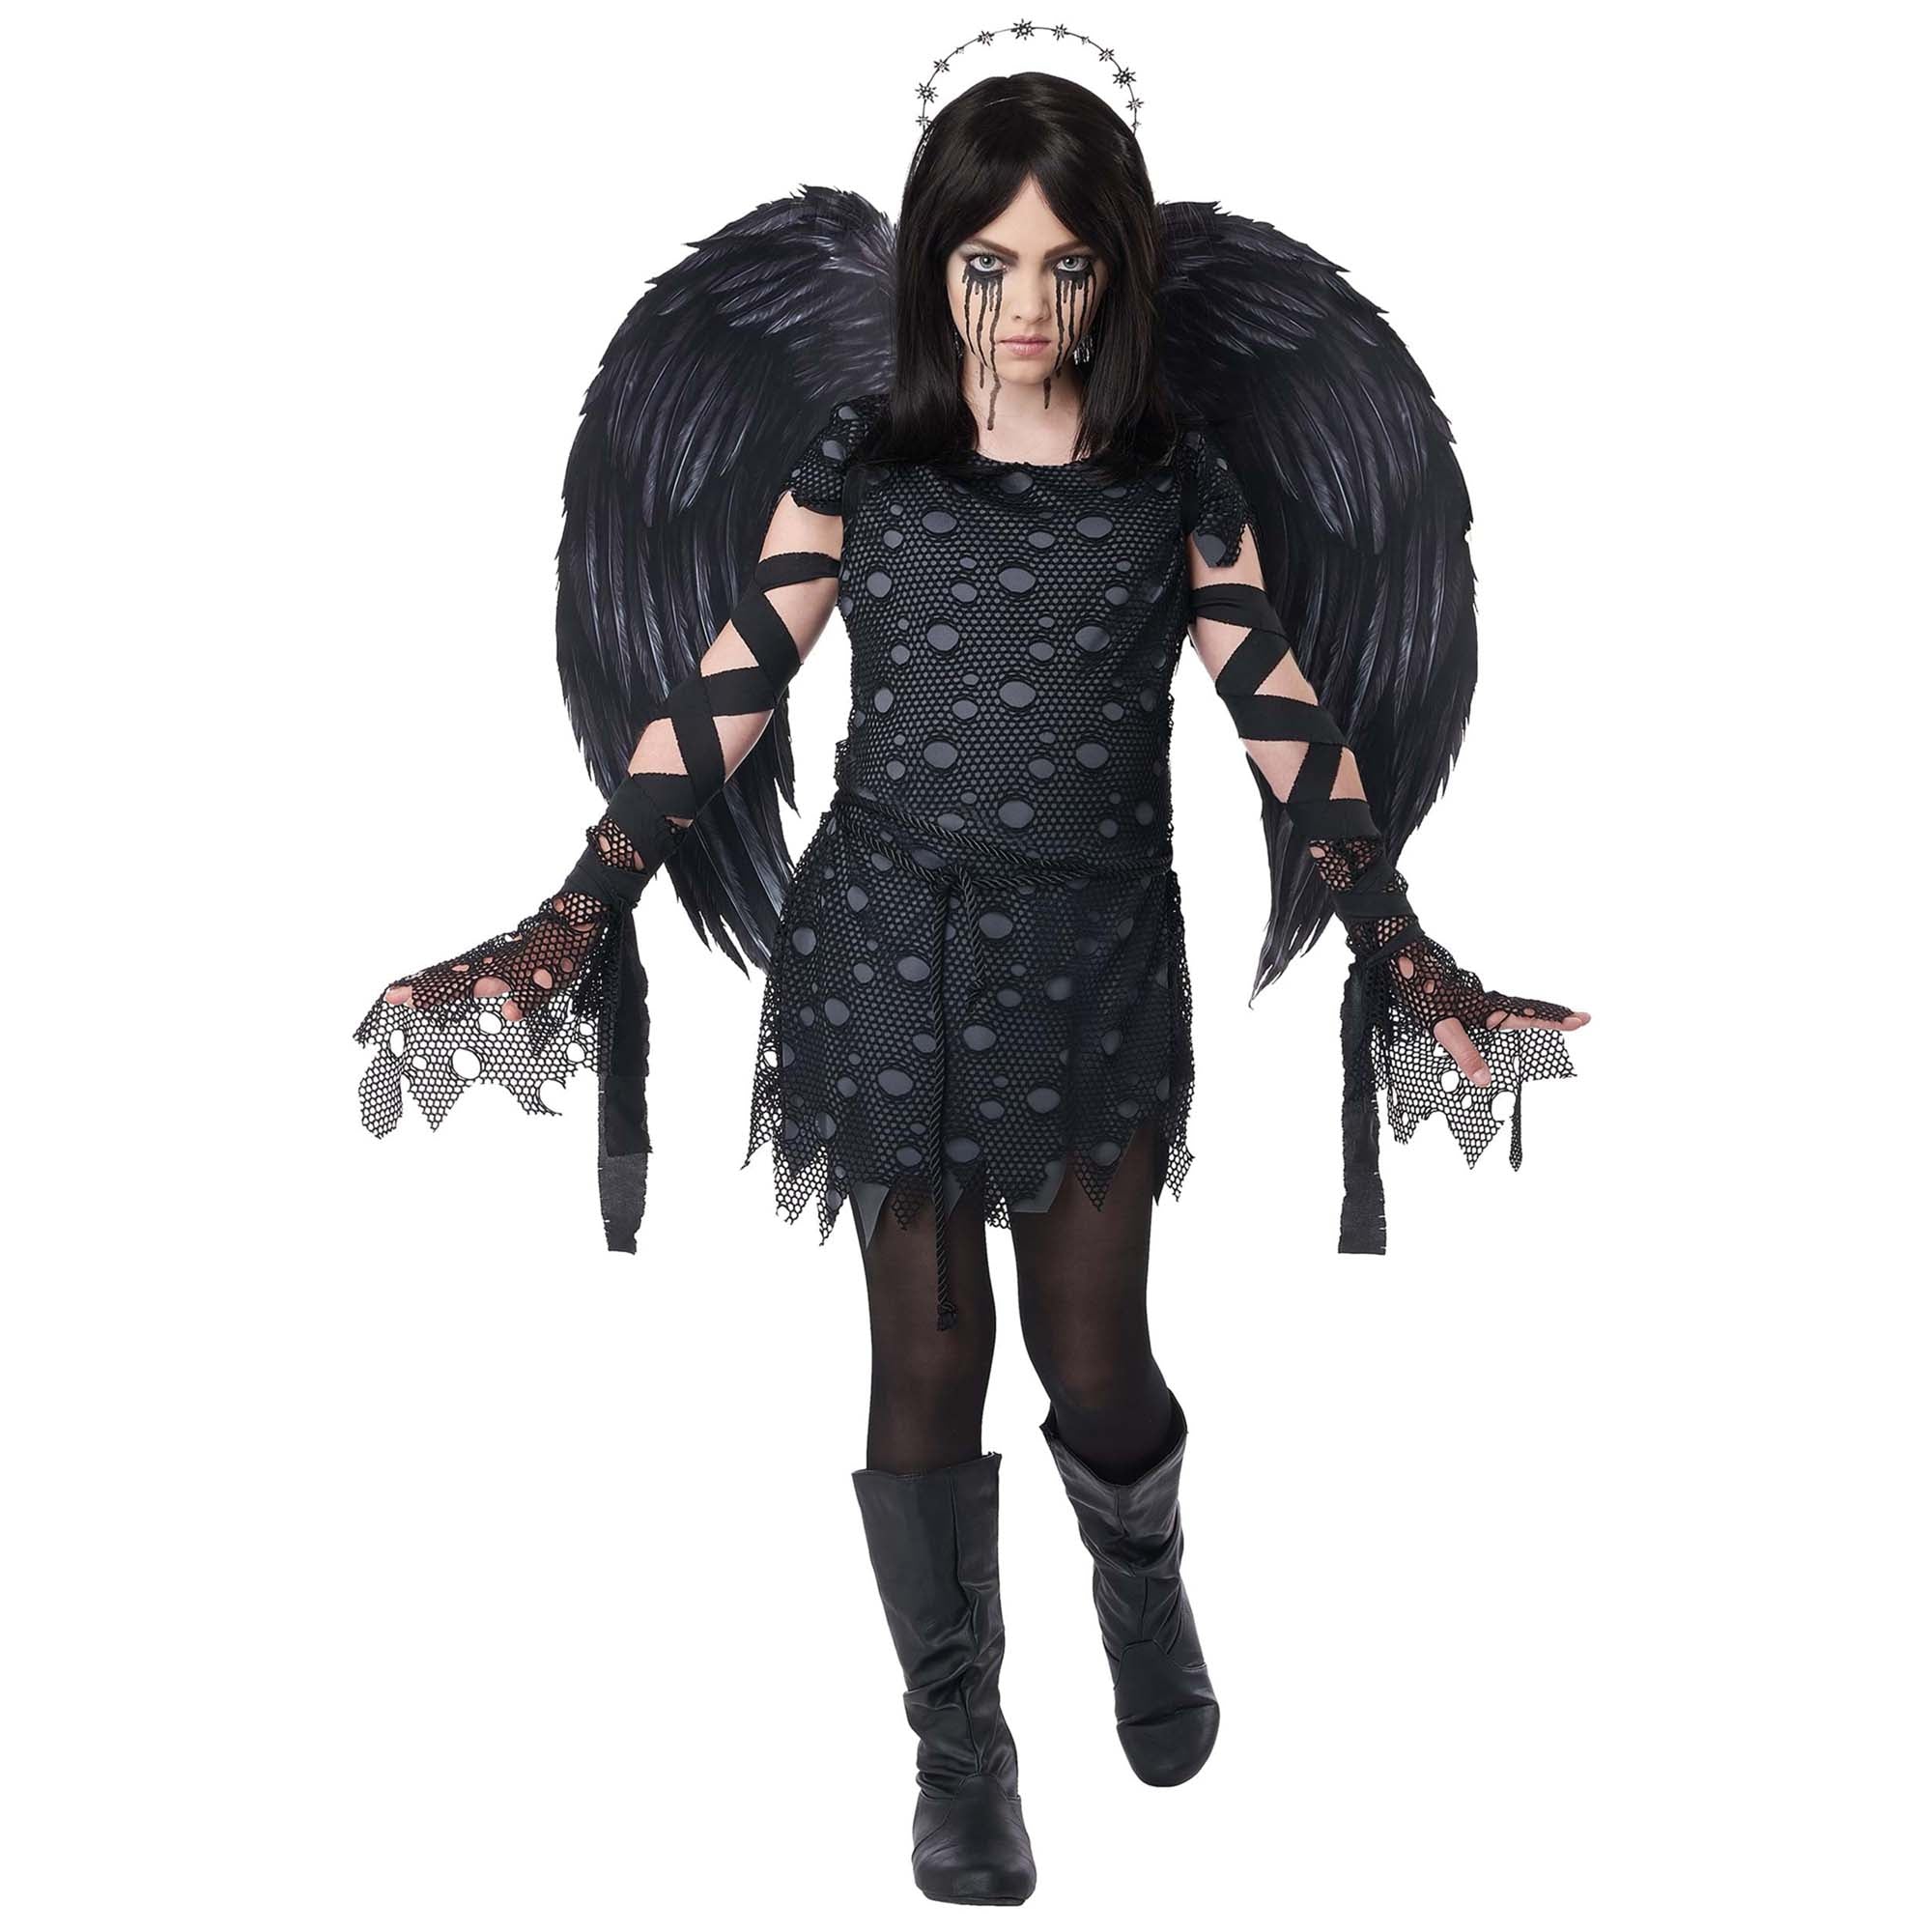 Teen Size Halloween Gothic Black Cheerleader Costume